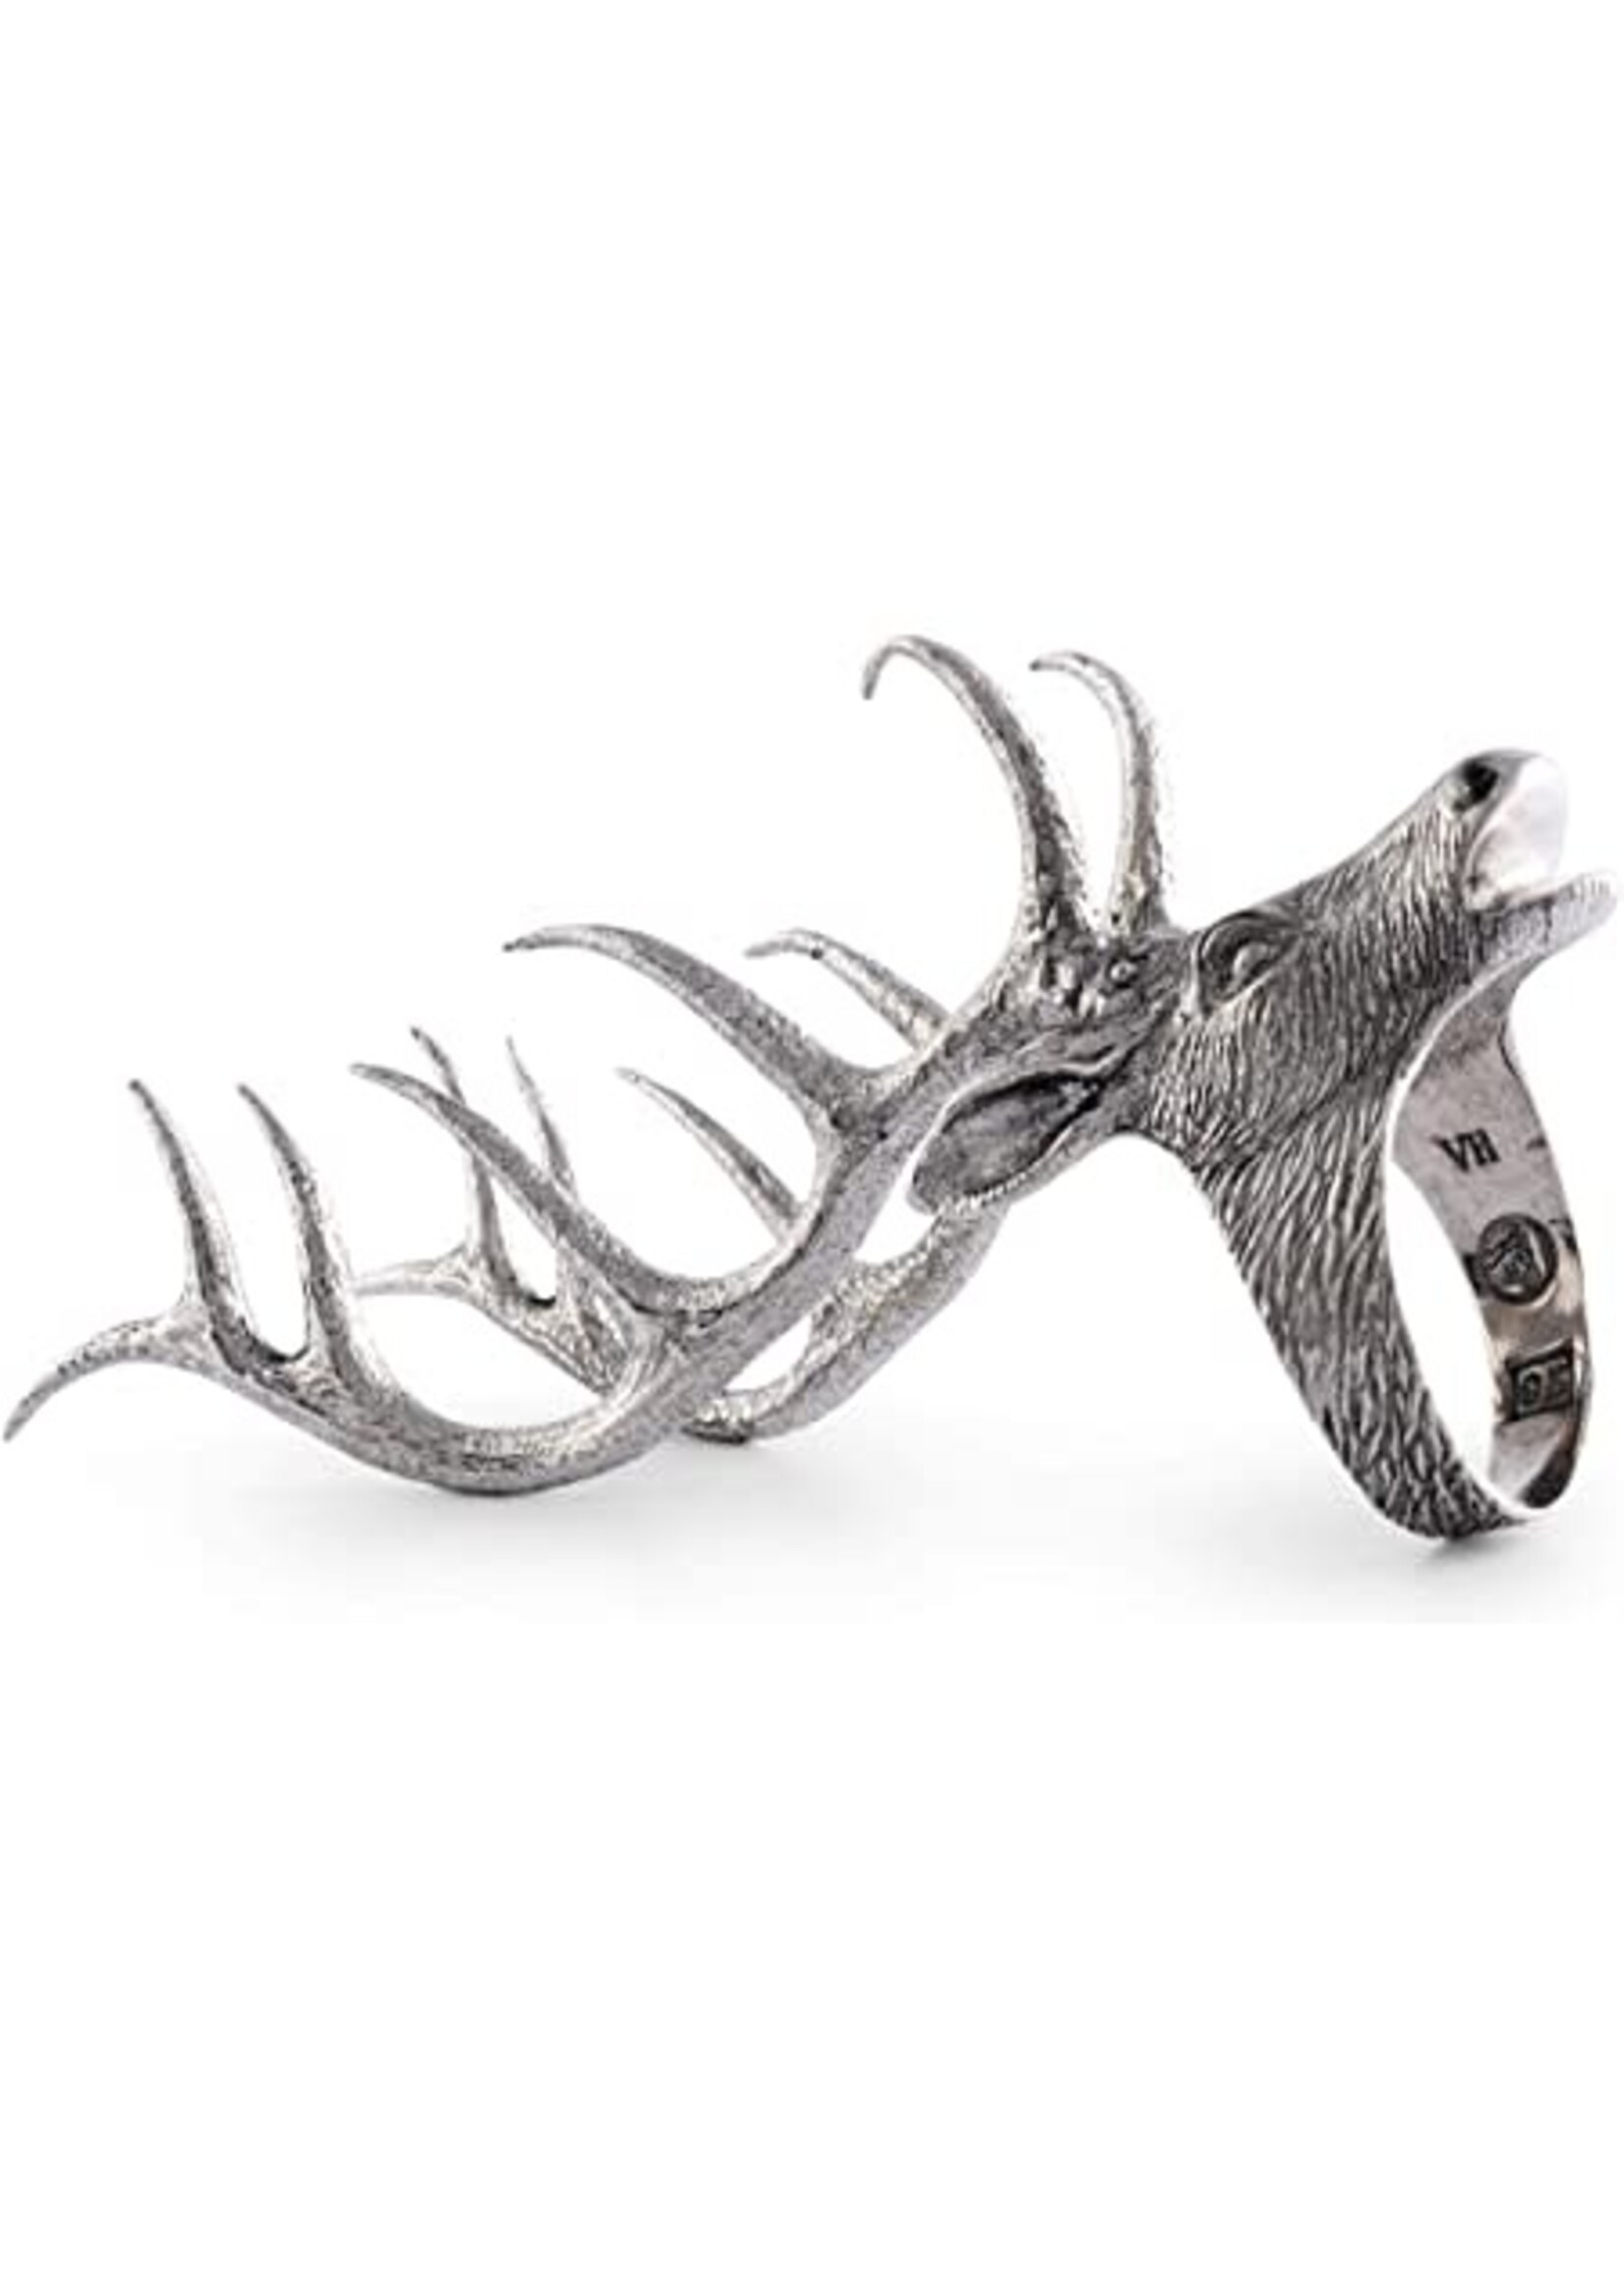 Napkin Ring - Elk Head